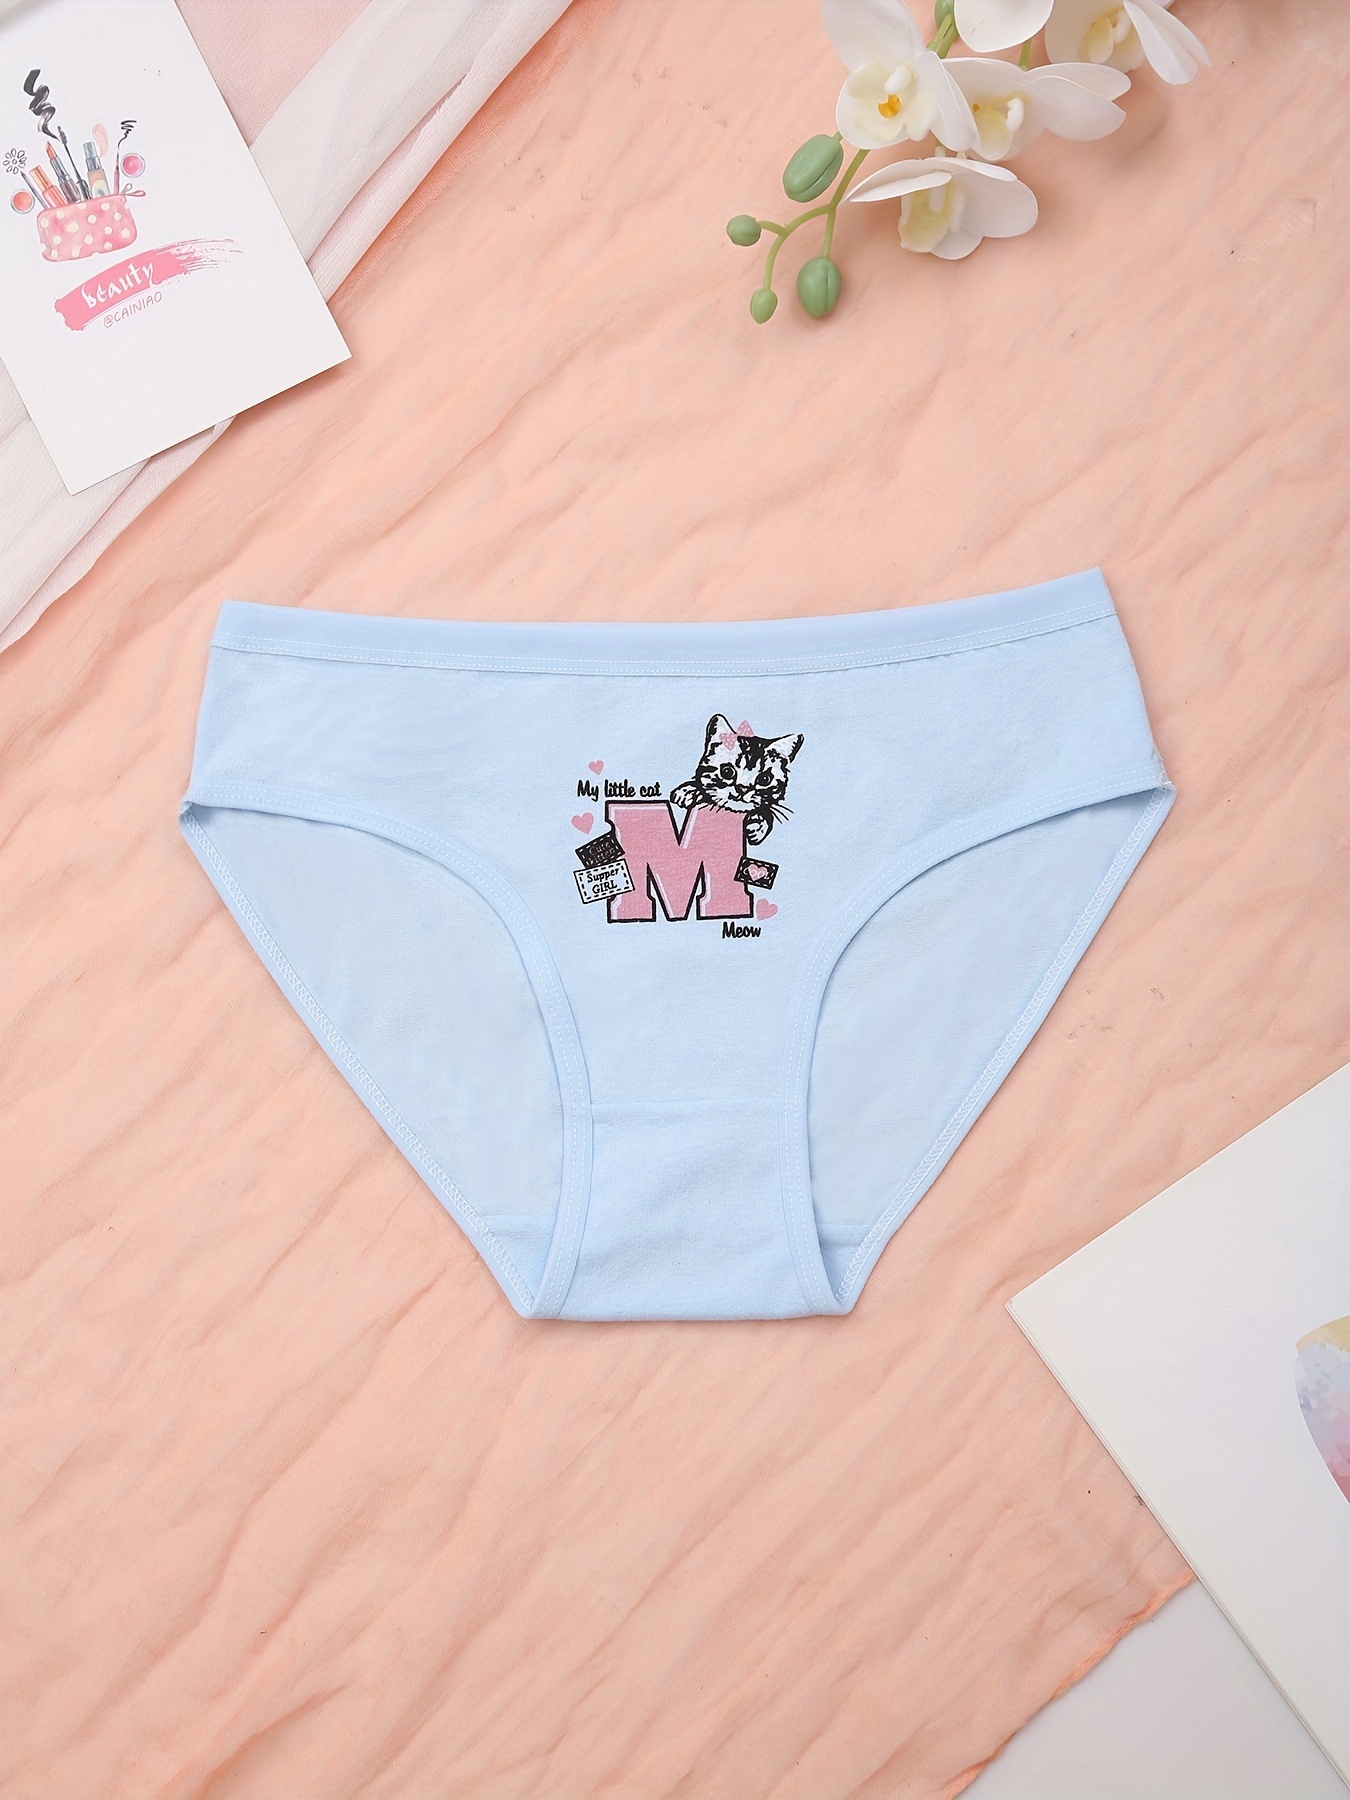 5pcs Cartoon Cat Print Briefs, Comfy & Cute Stretchy Intimates Panties,  Women's Lingerie & Underwear